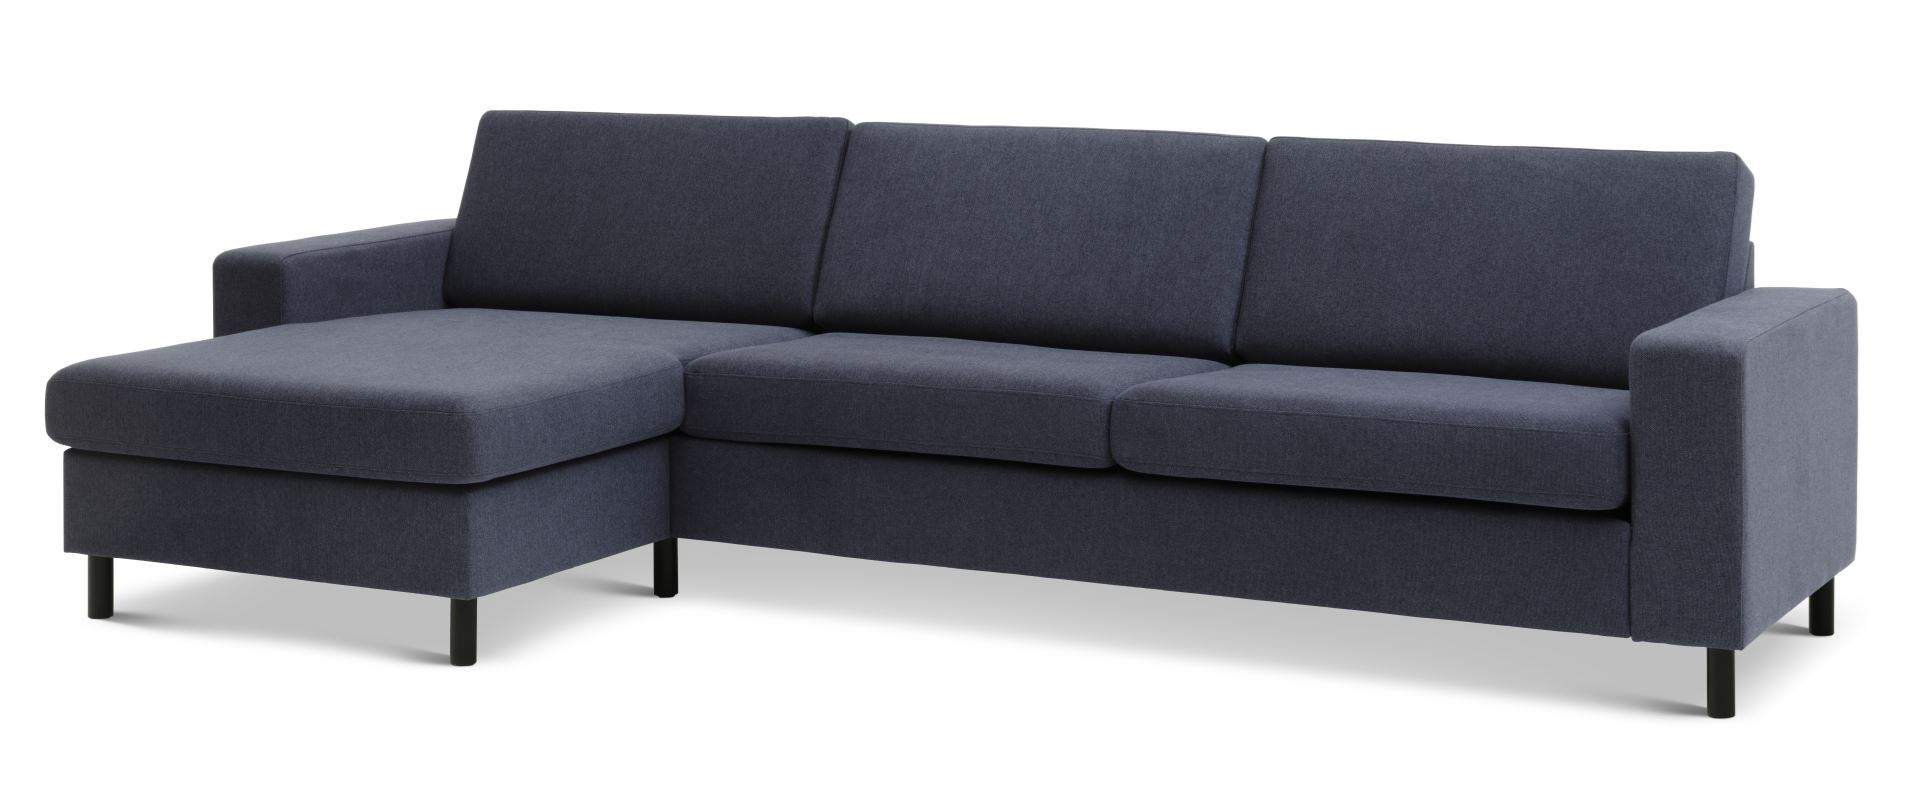 Pan set 8 3D XL sofa, m. chaiselong - blå polyester stof og sort træ